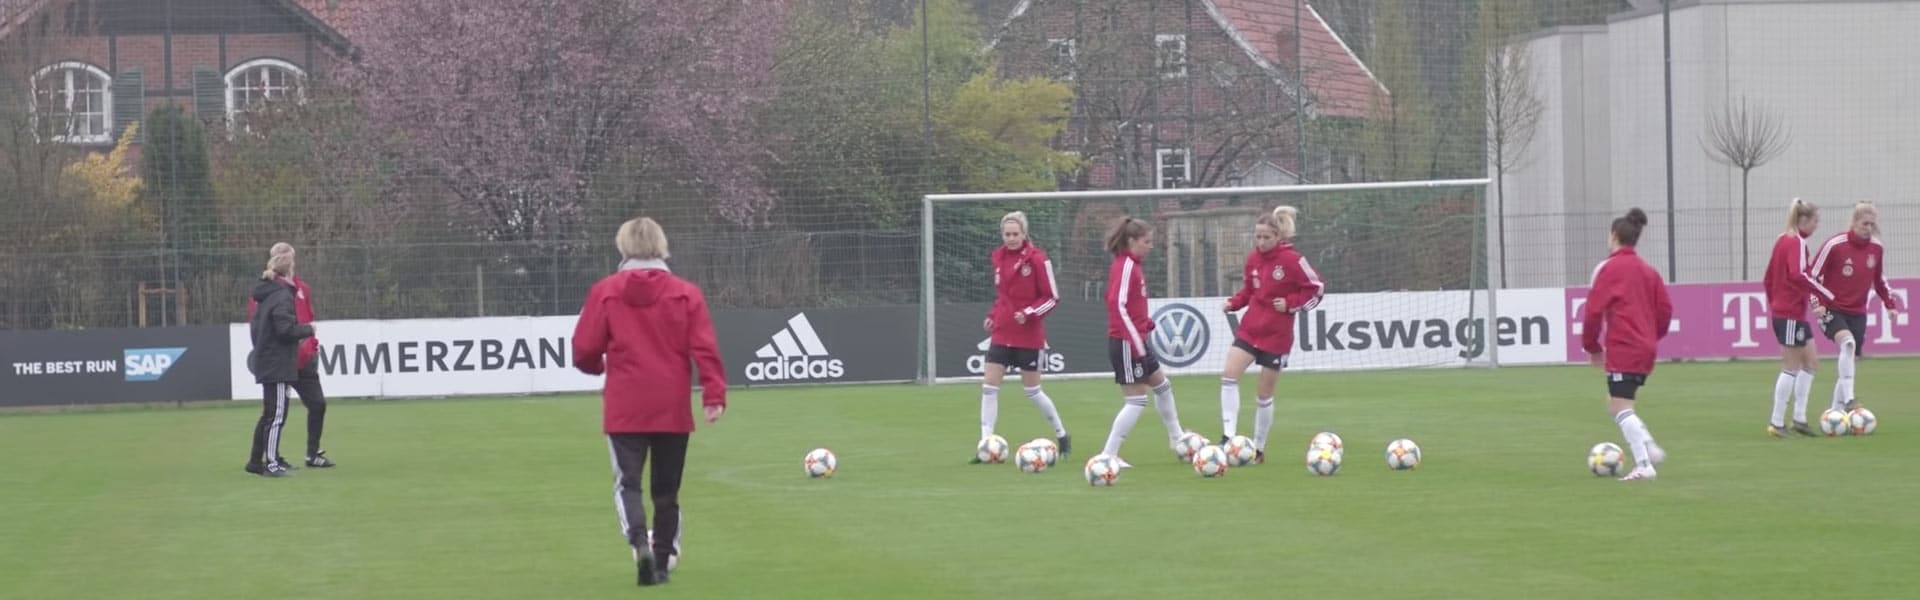 DFB Women's Football Team: Power of Us videos